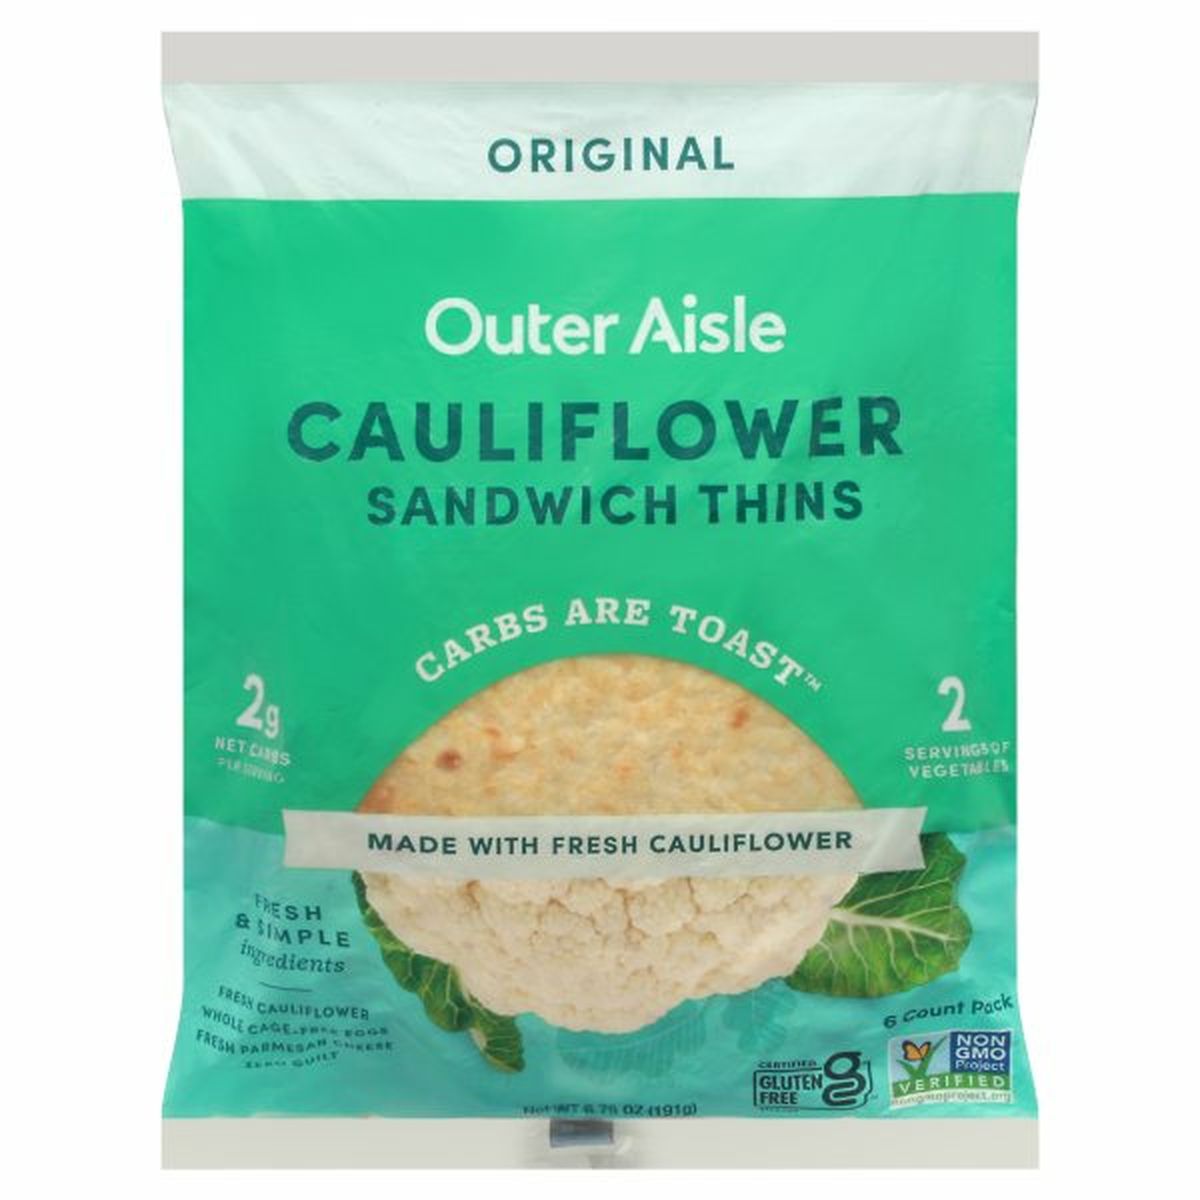 Calories in Outer Aisle Sandwich Thins, Cauliflower, Original